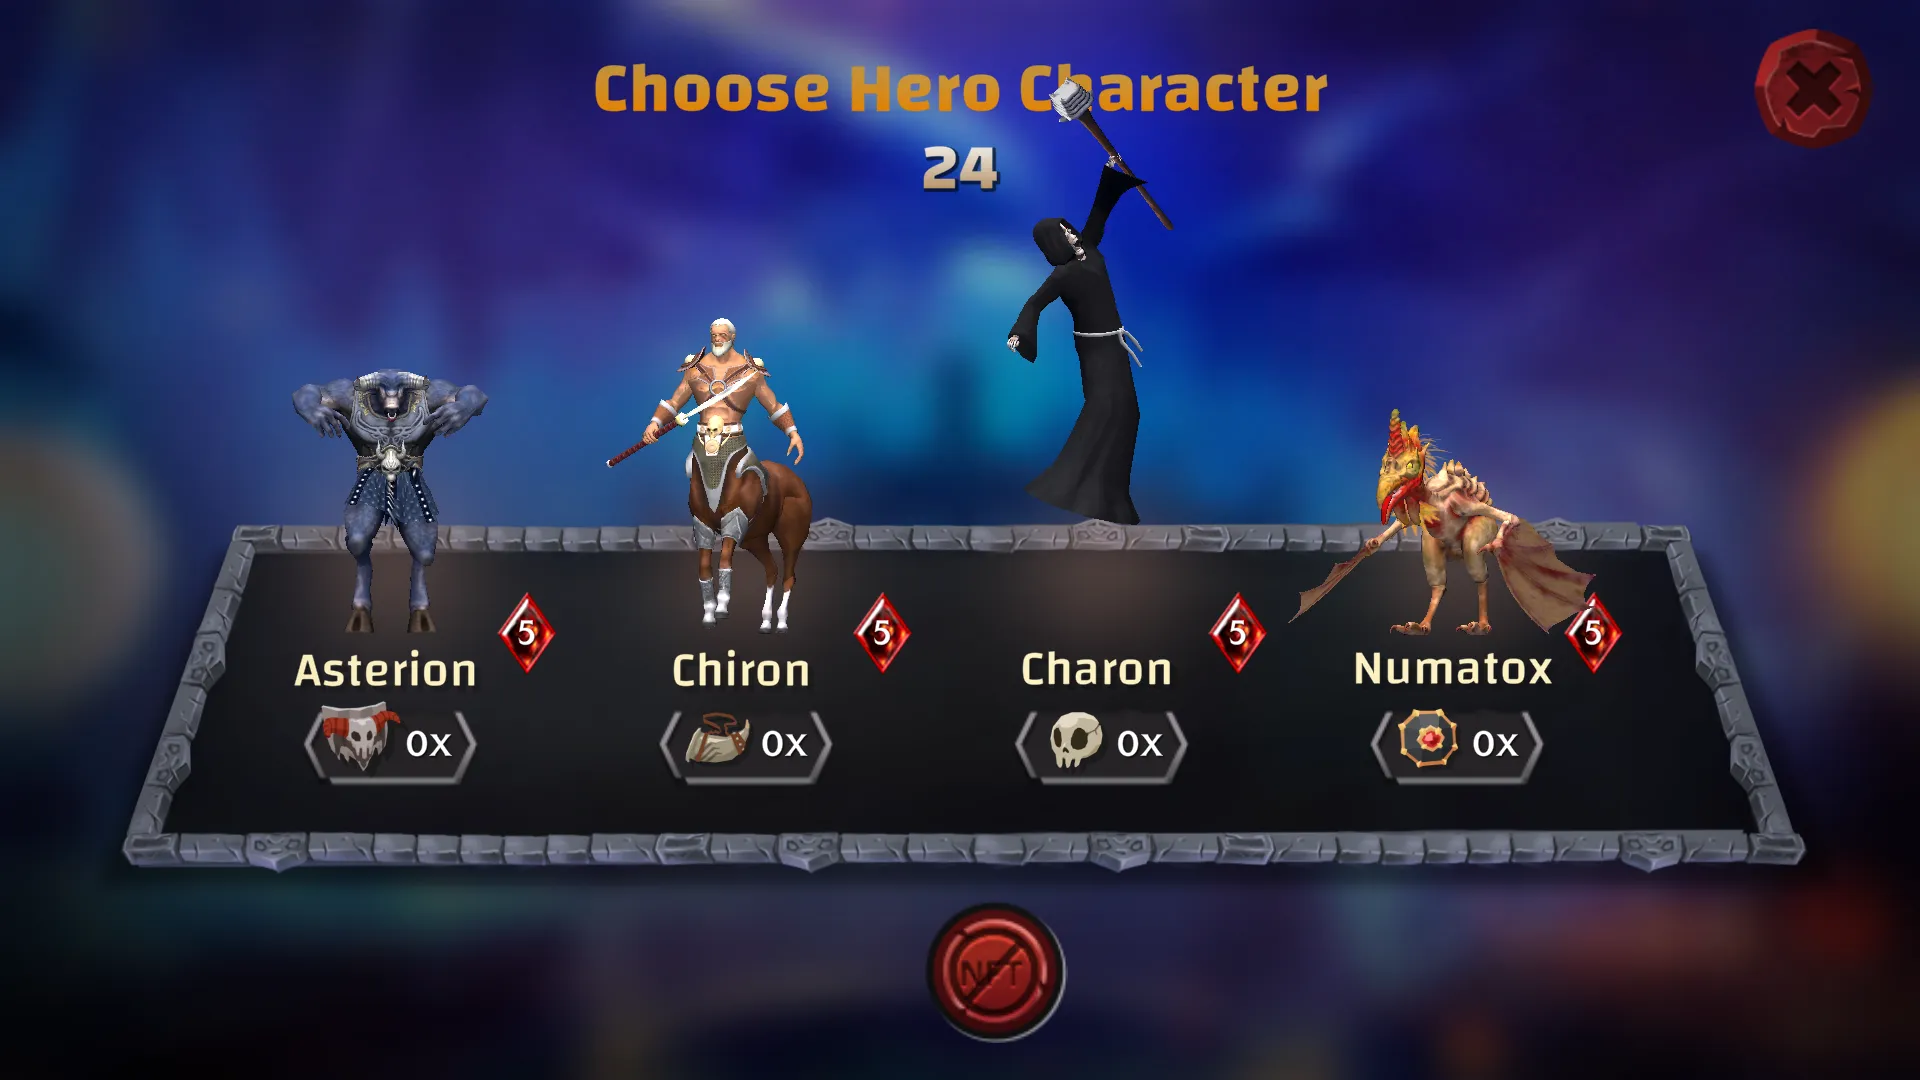 Vulcan's Forge Arena gameplay: Choose Character Hero